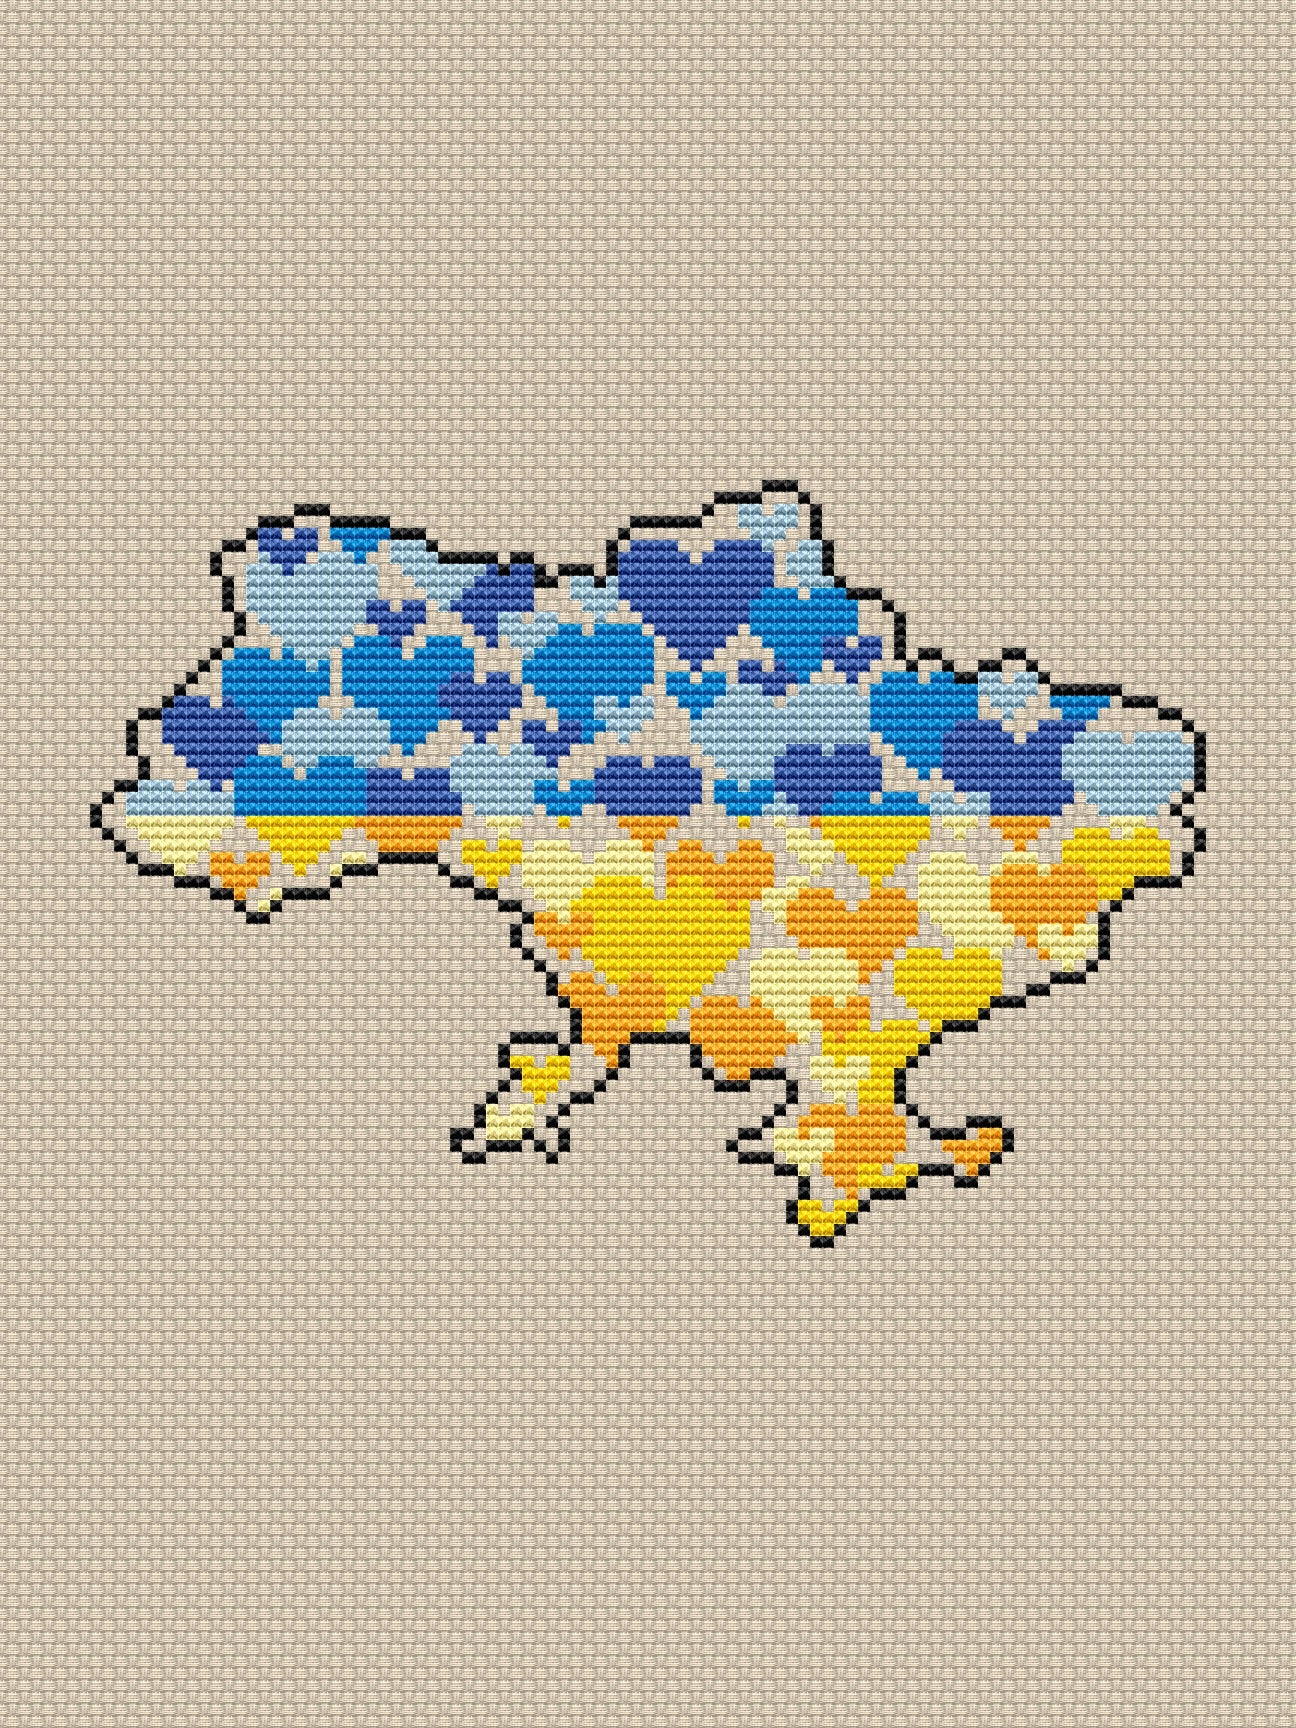 Ukraine cross stitch pattern free-2